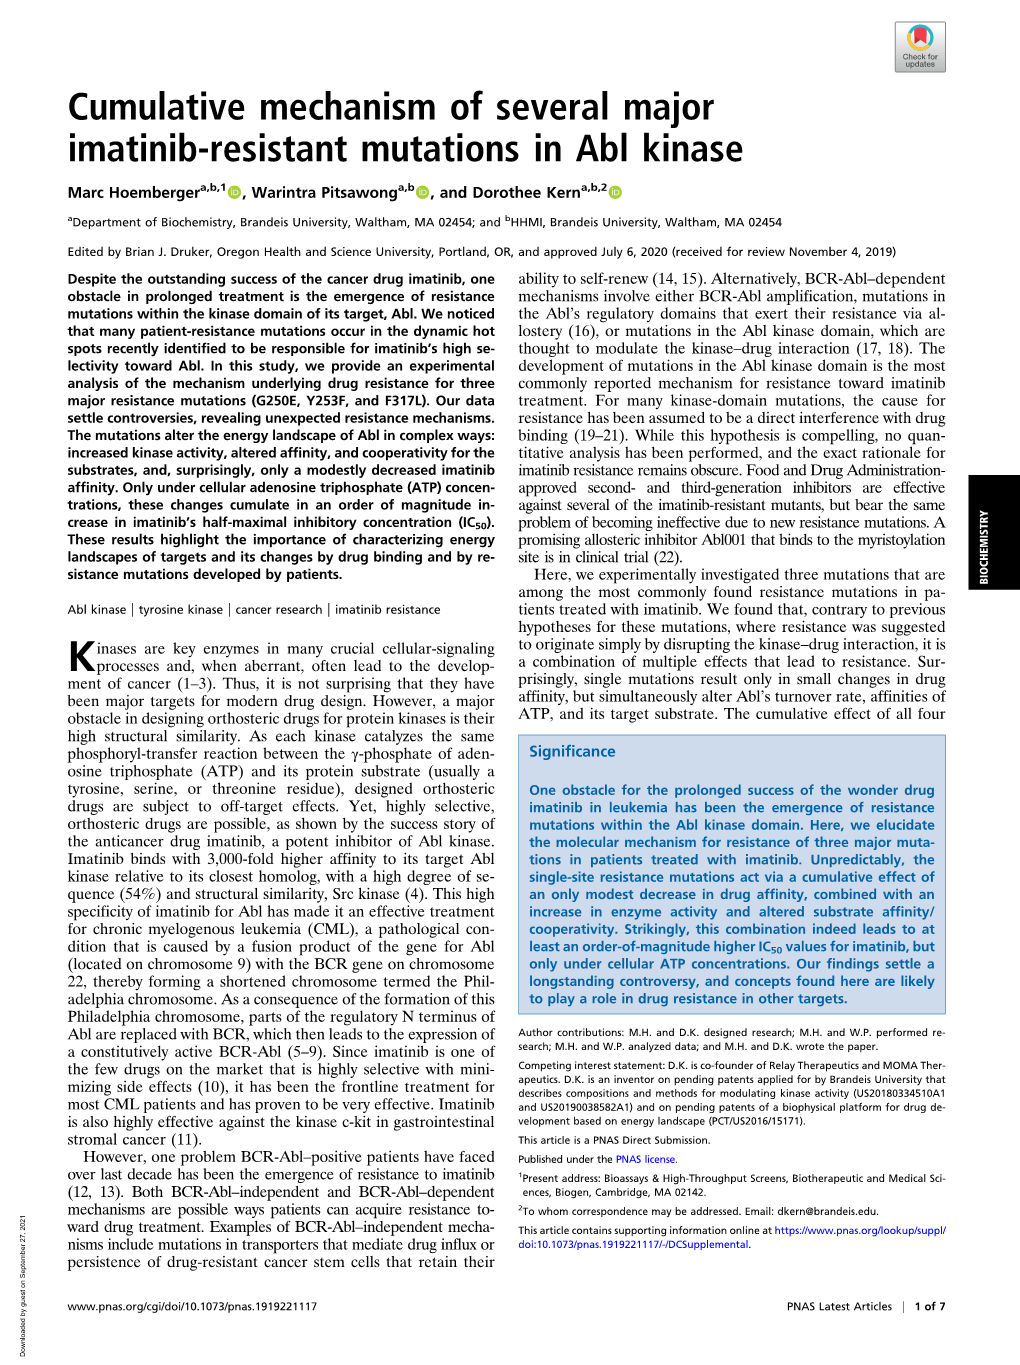 Cumulative Mechanism of Several Major Imatinib-Resistant Mutations in Abl Kinase